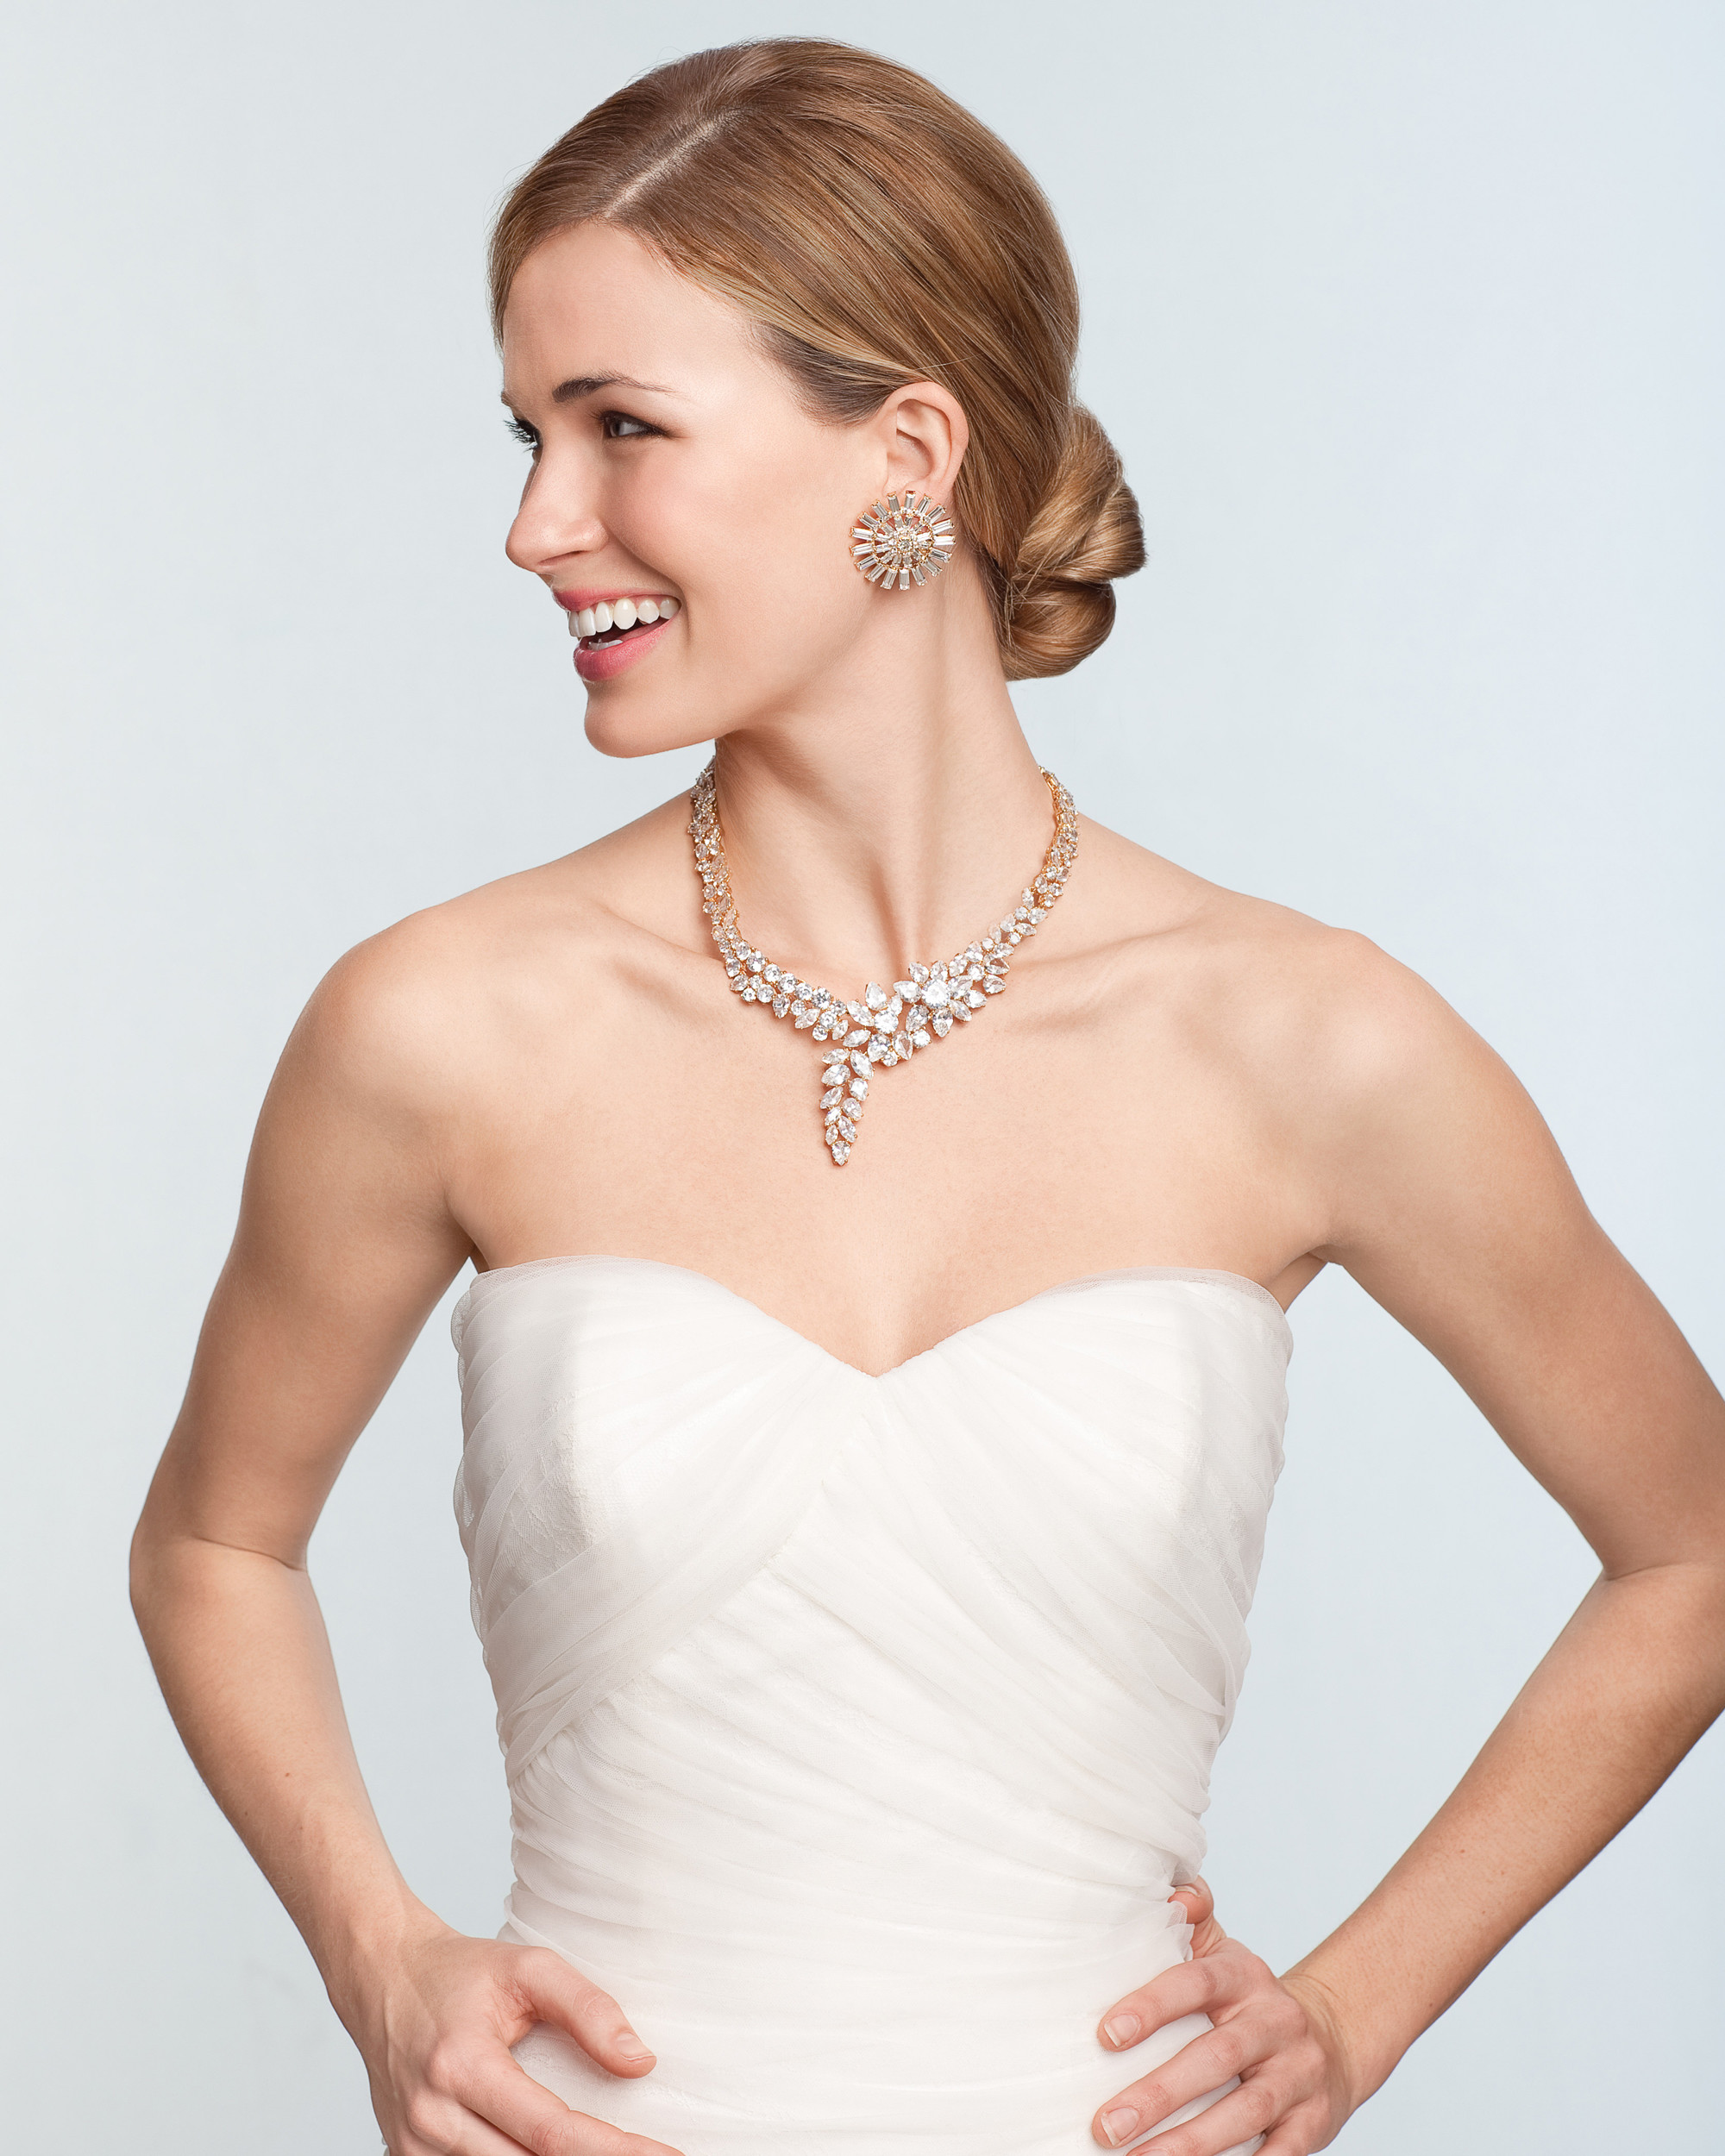 The Best Bridal Jewelry for Every Wedding Dress Neckline ...